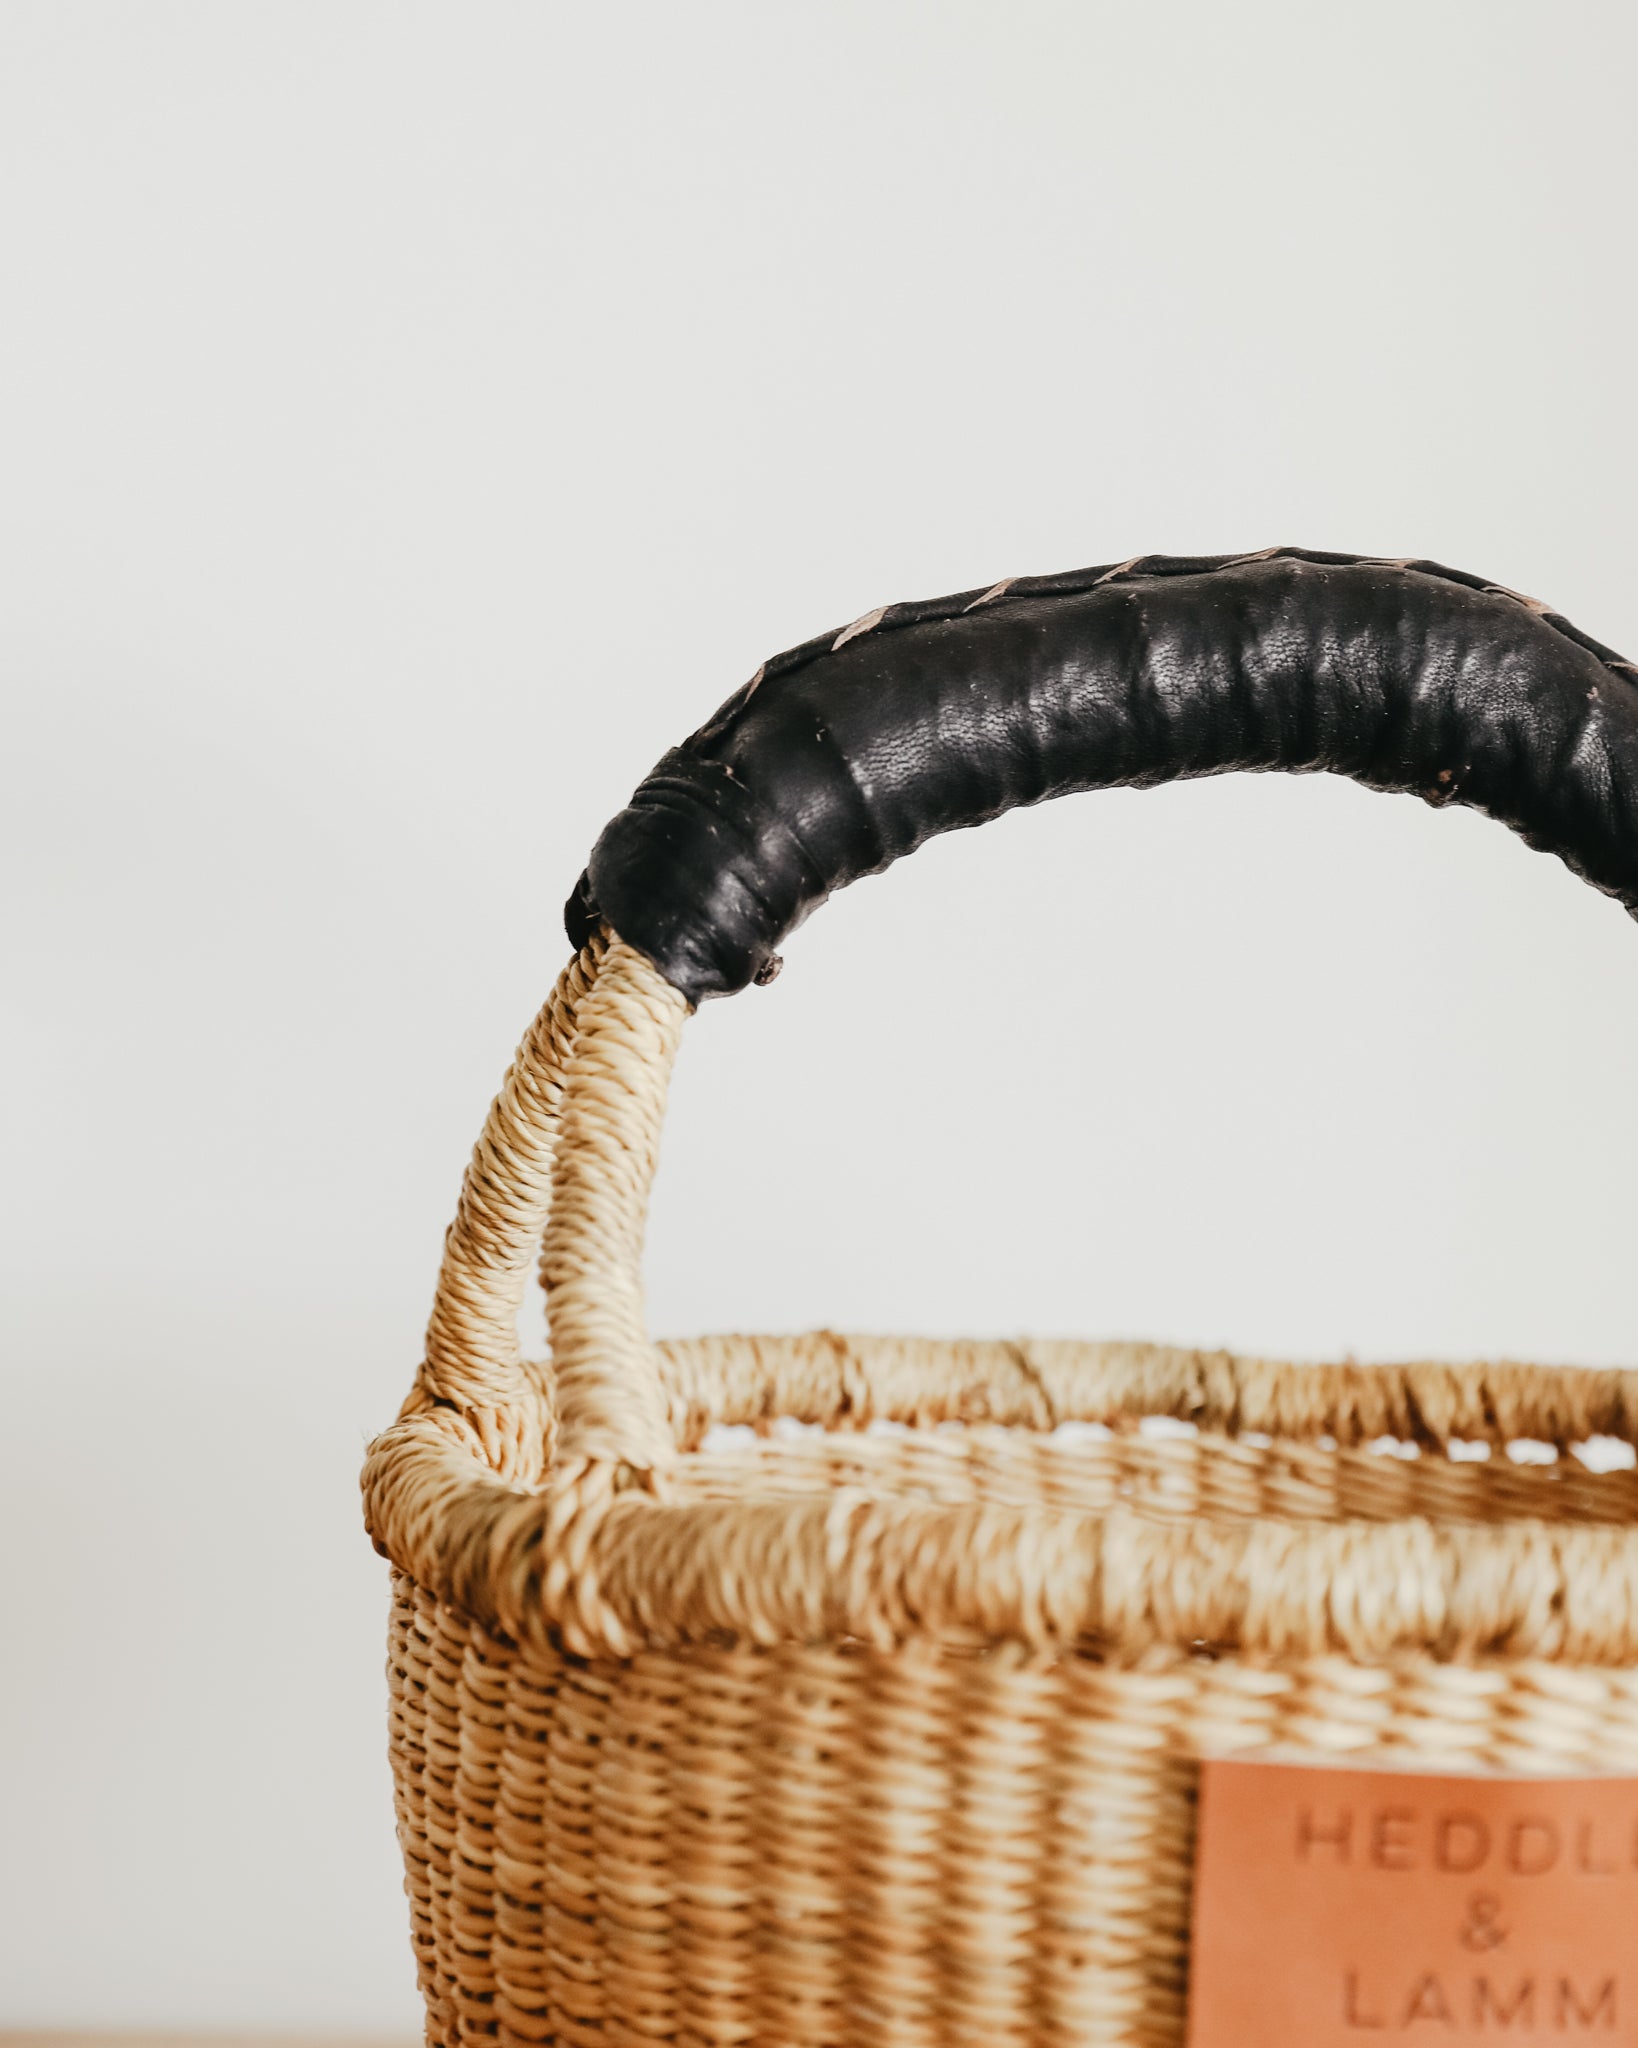 Small Bolga Basket - Black Handle